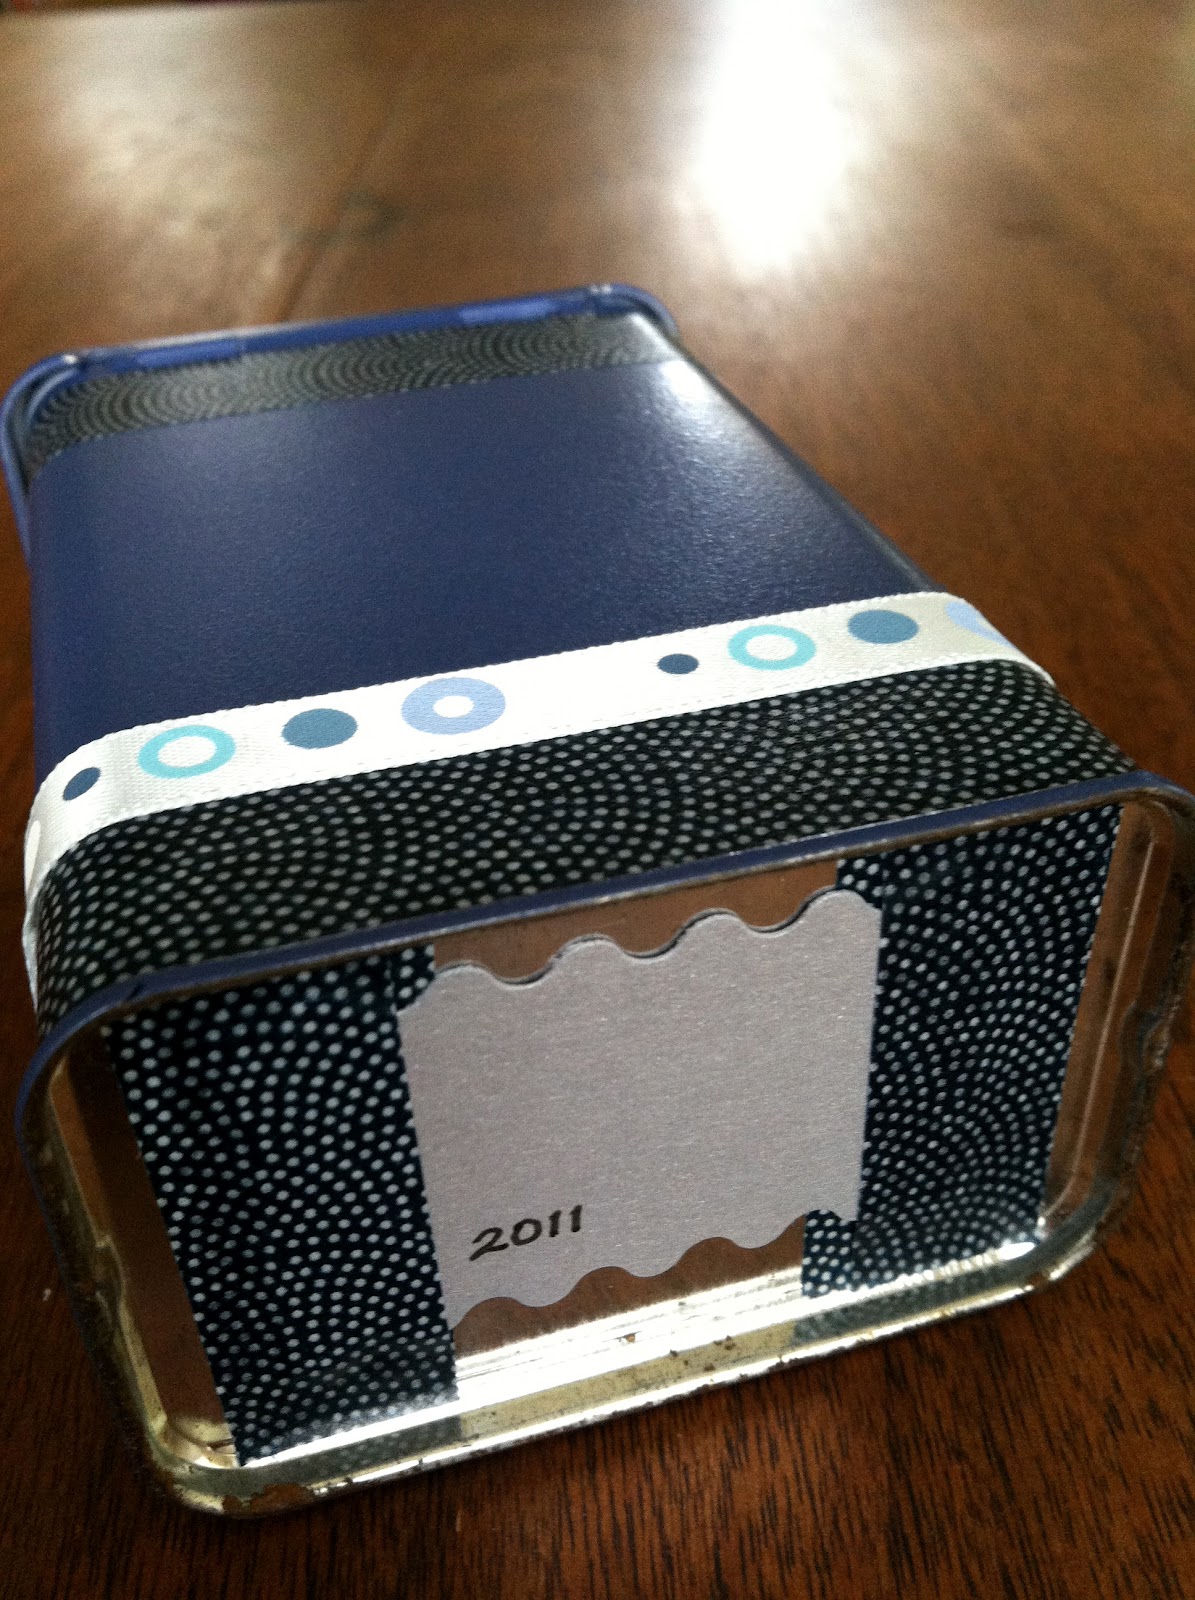 tonette time: the mini polaroid friend-maker and gift box